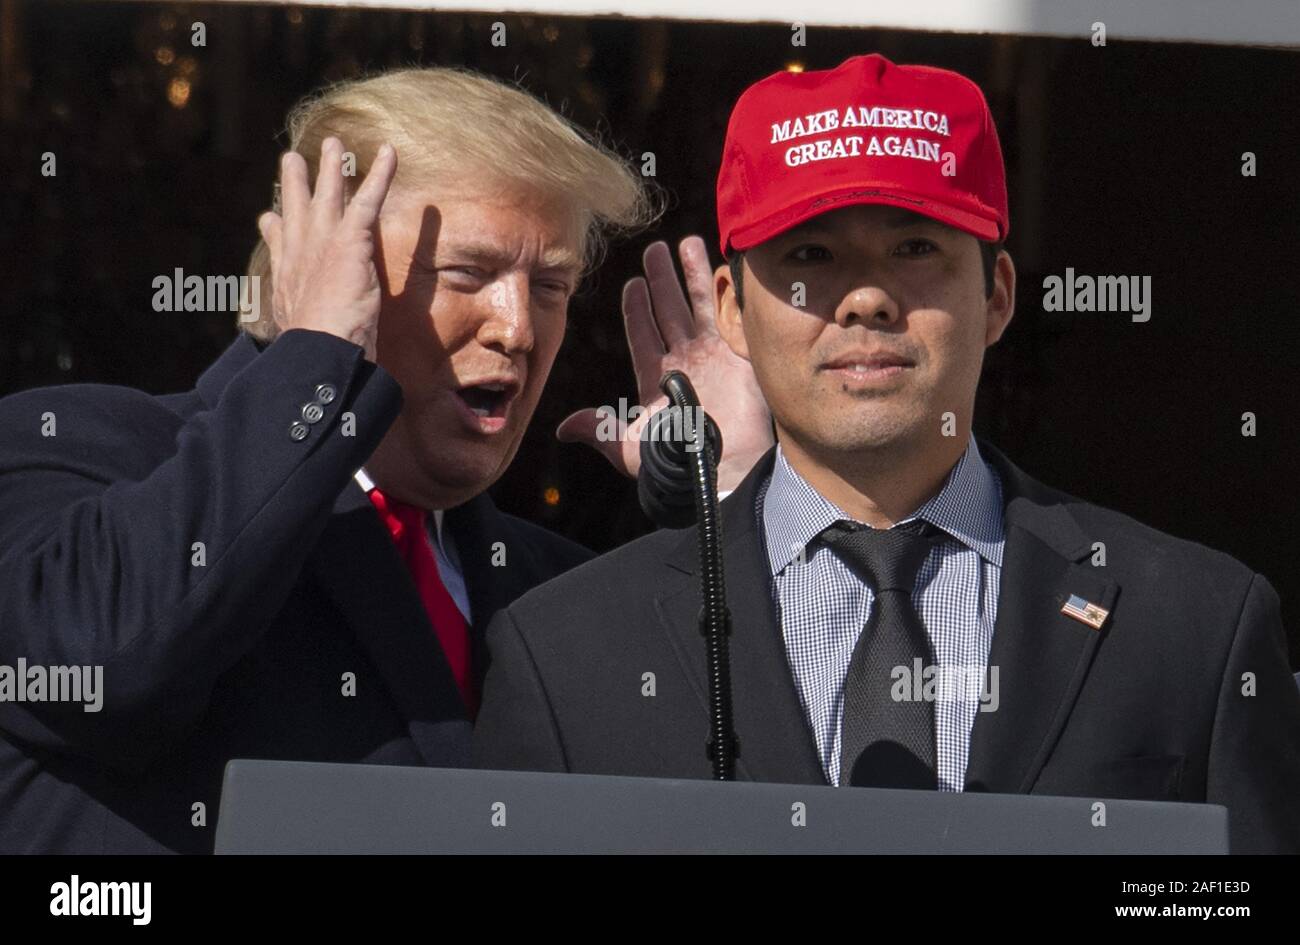 Kurt Suzuki: MAGA hat at White House 'just trying to have some fun